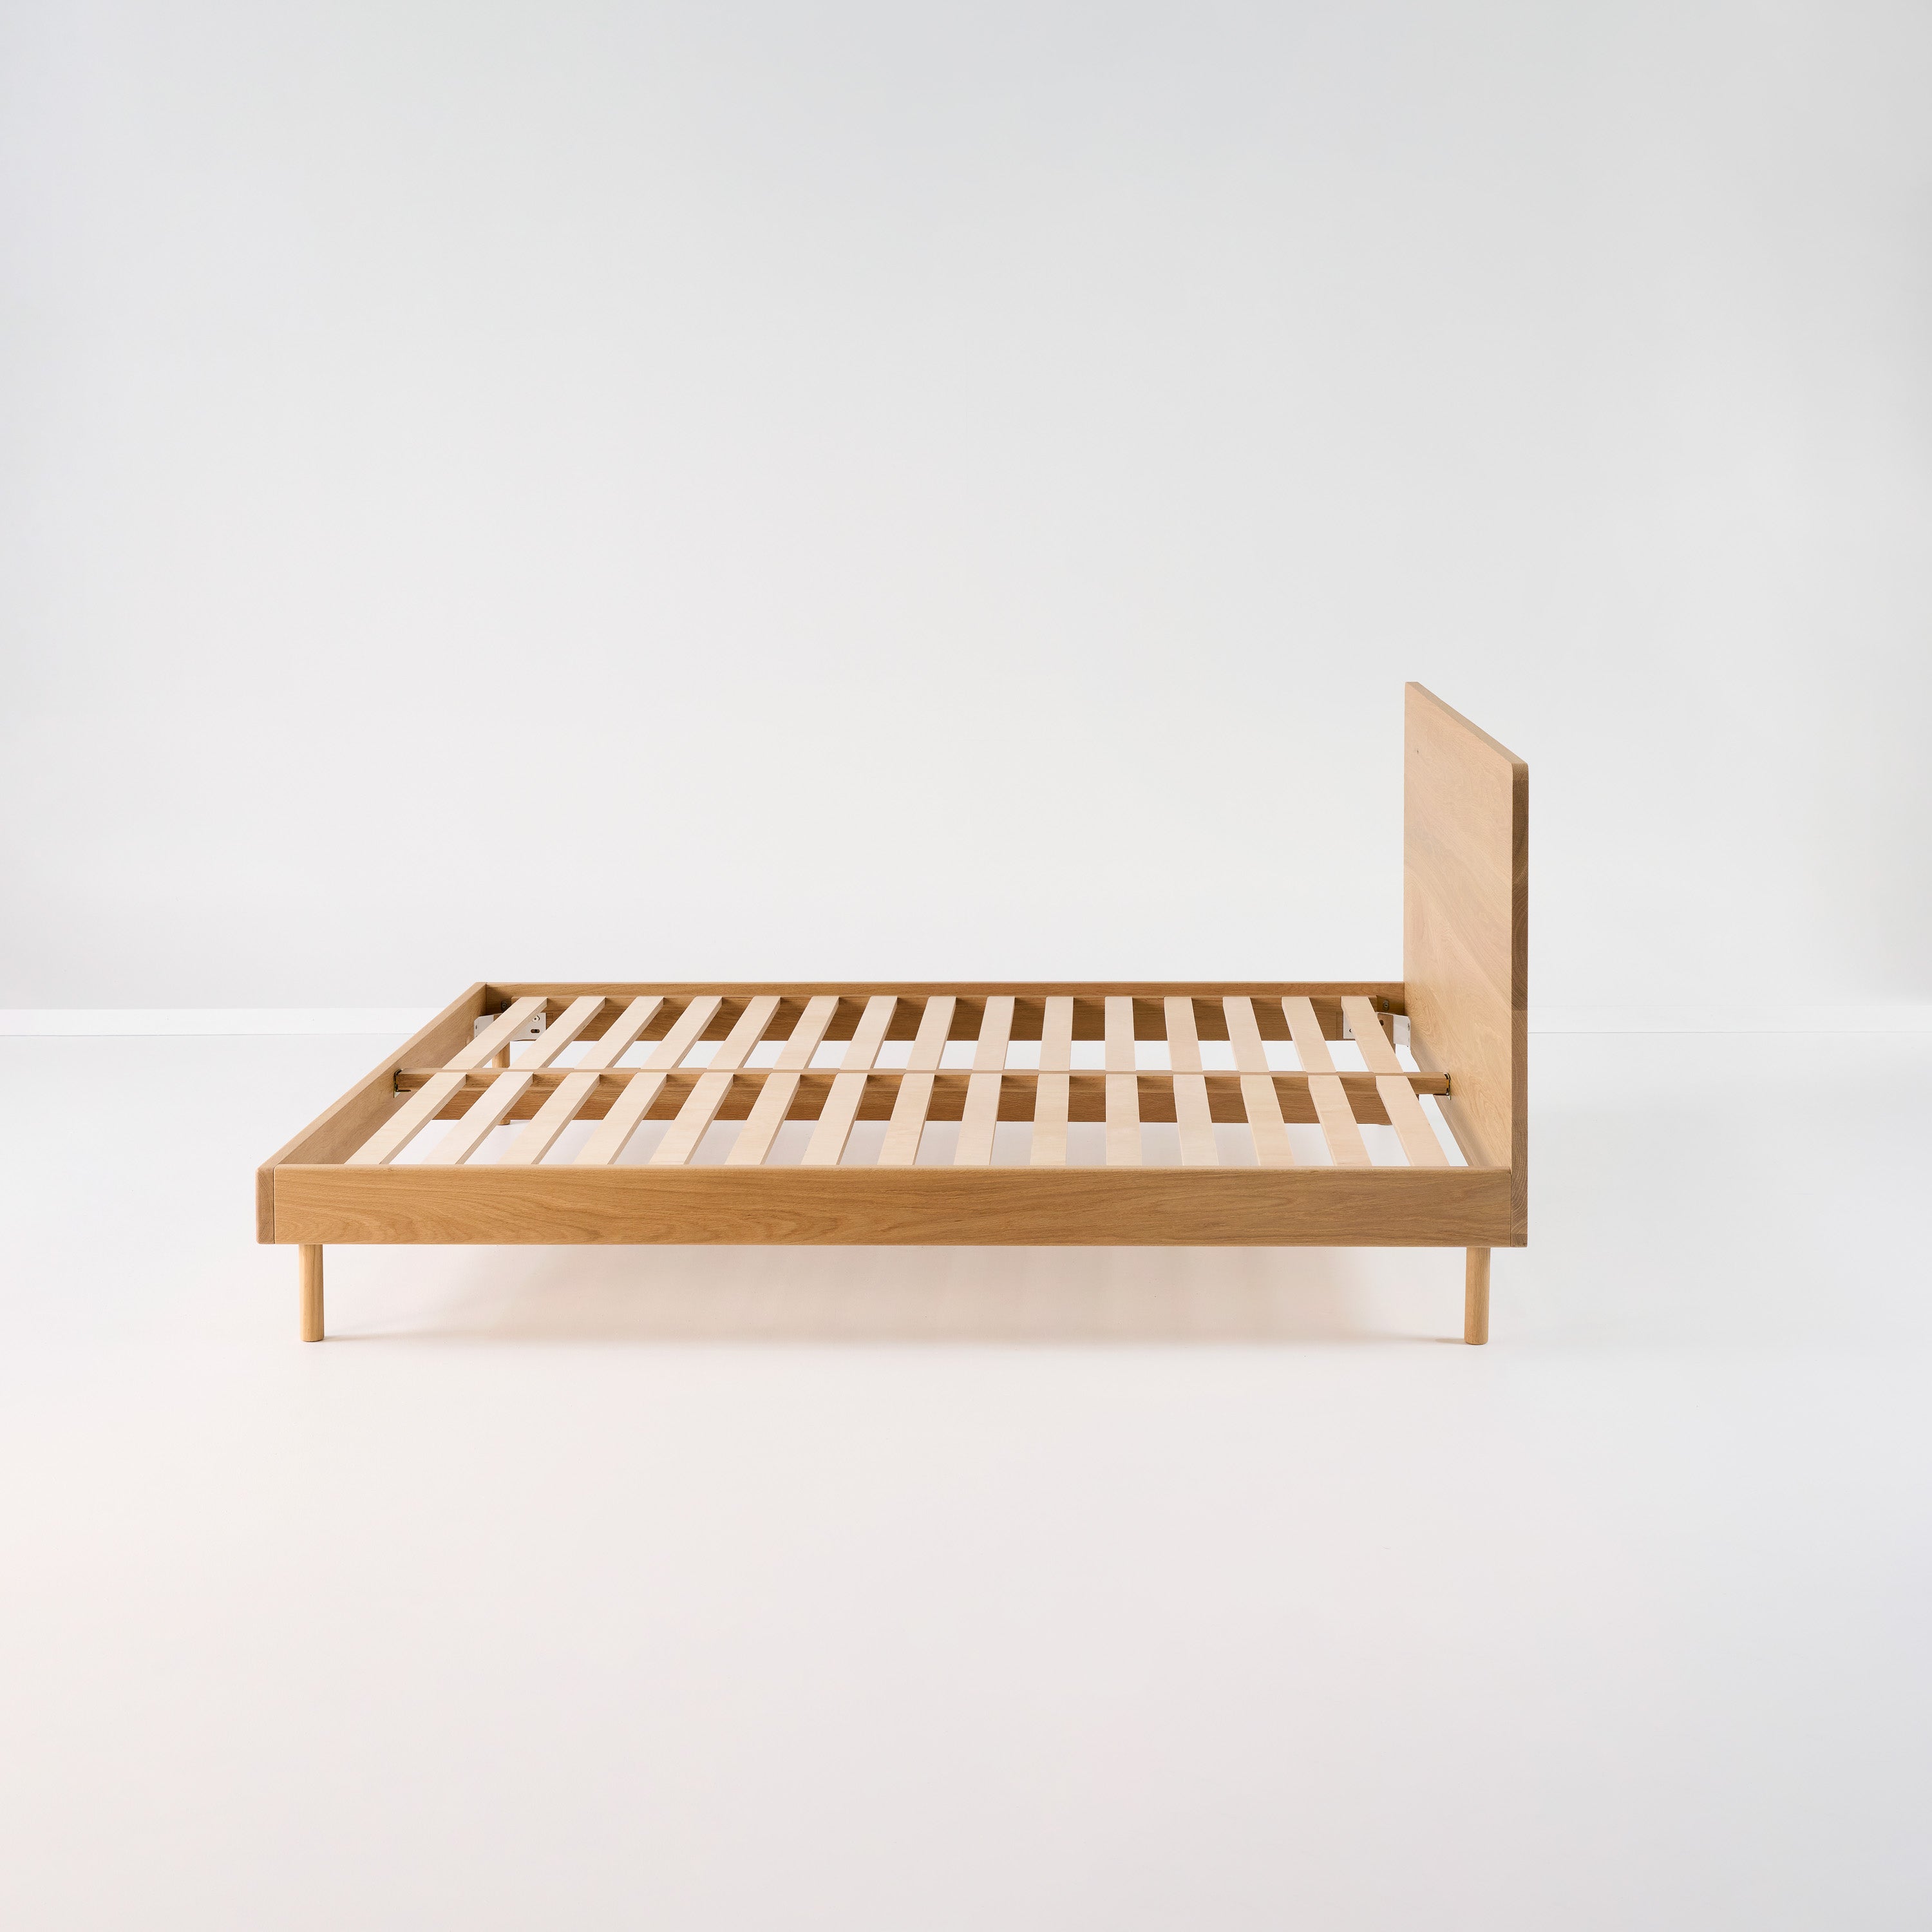 Mubu Classic Timber Bed Frame - Mubu Home: Modern Timber Beds and Furniture